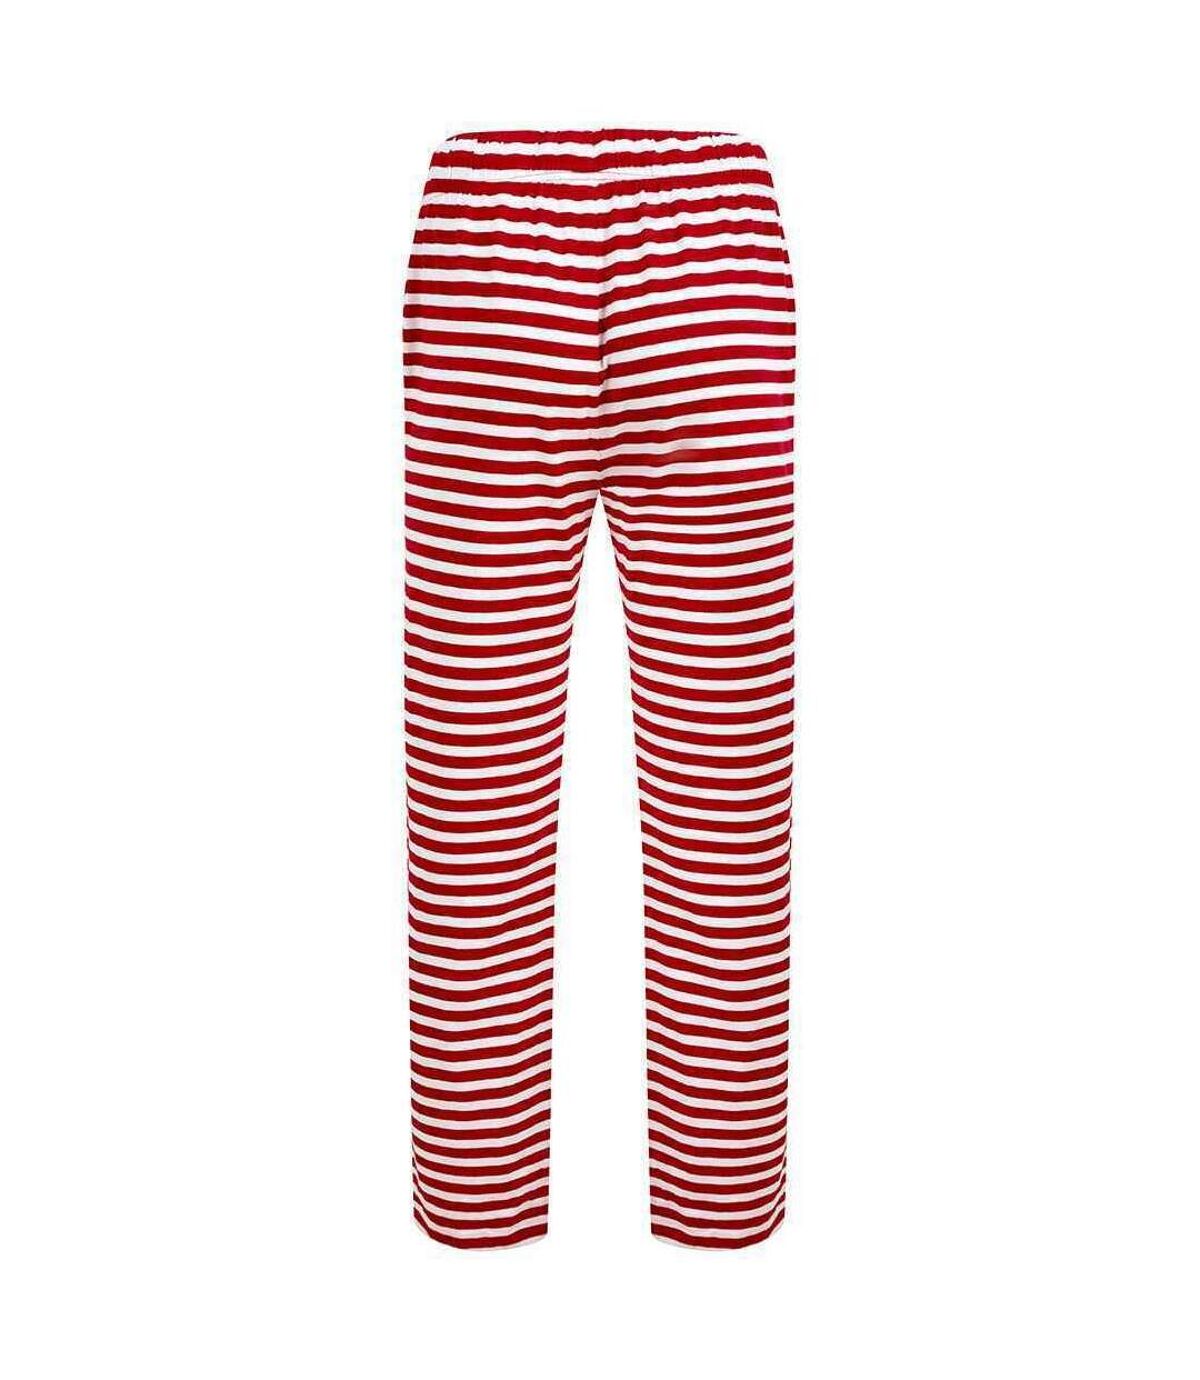 Skinni Fit Mens Lounge Pants (Red/White) - UTRW7996